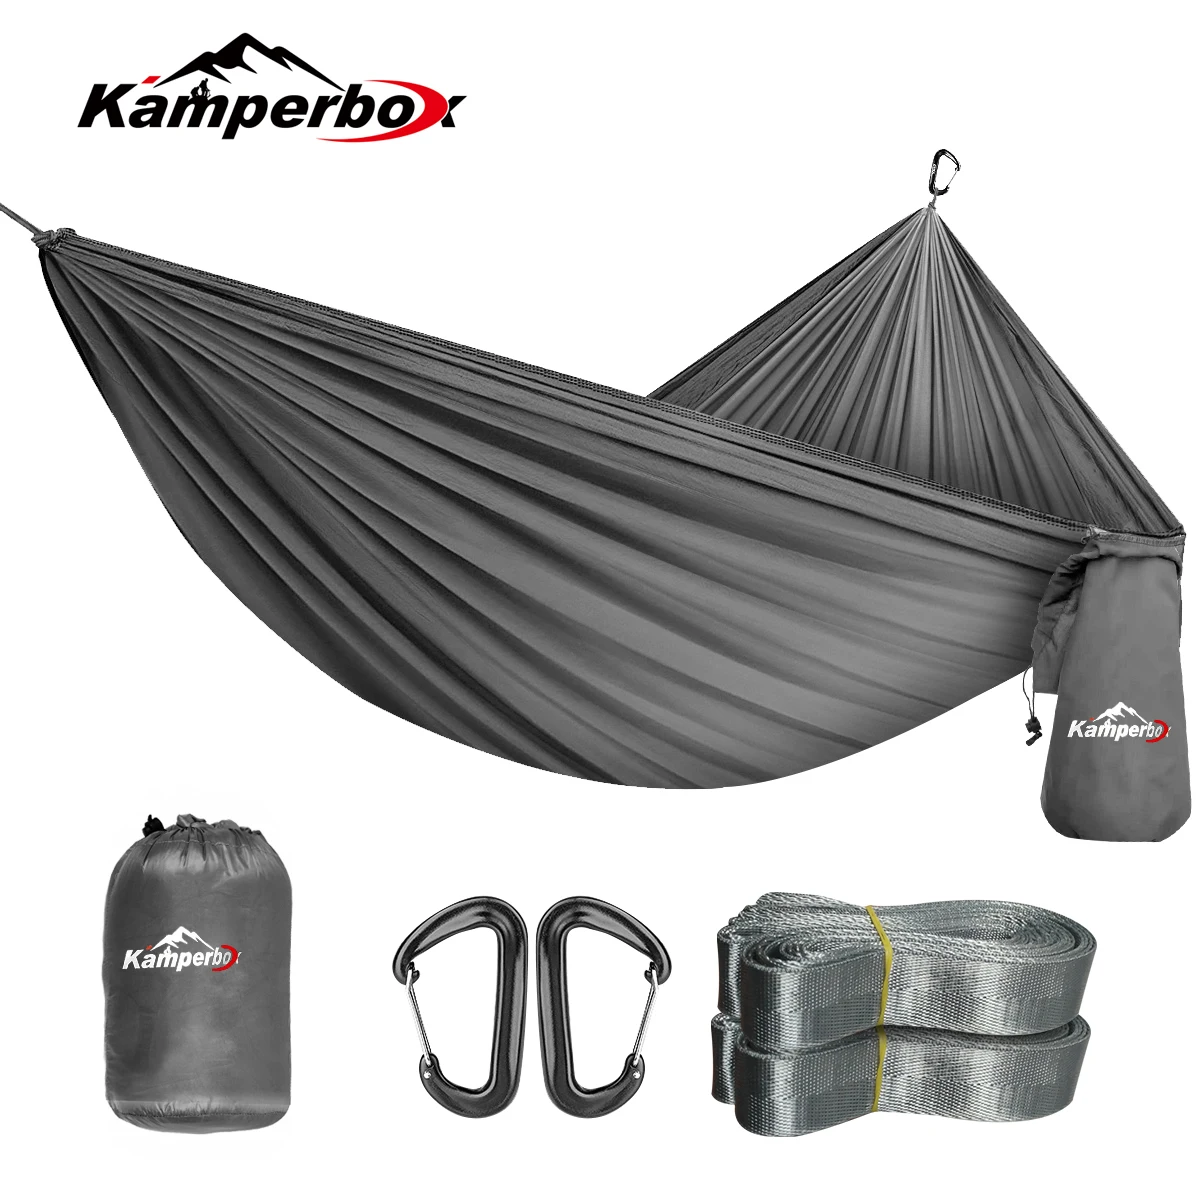 Hammock Camping Hammock Adjustable Straps Sleeping Bag System Kamperbox HM08